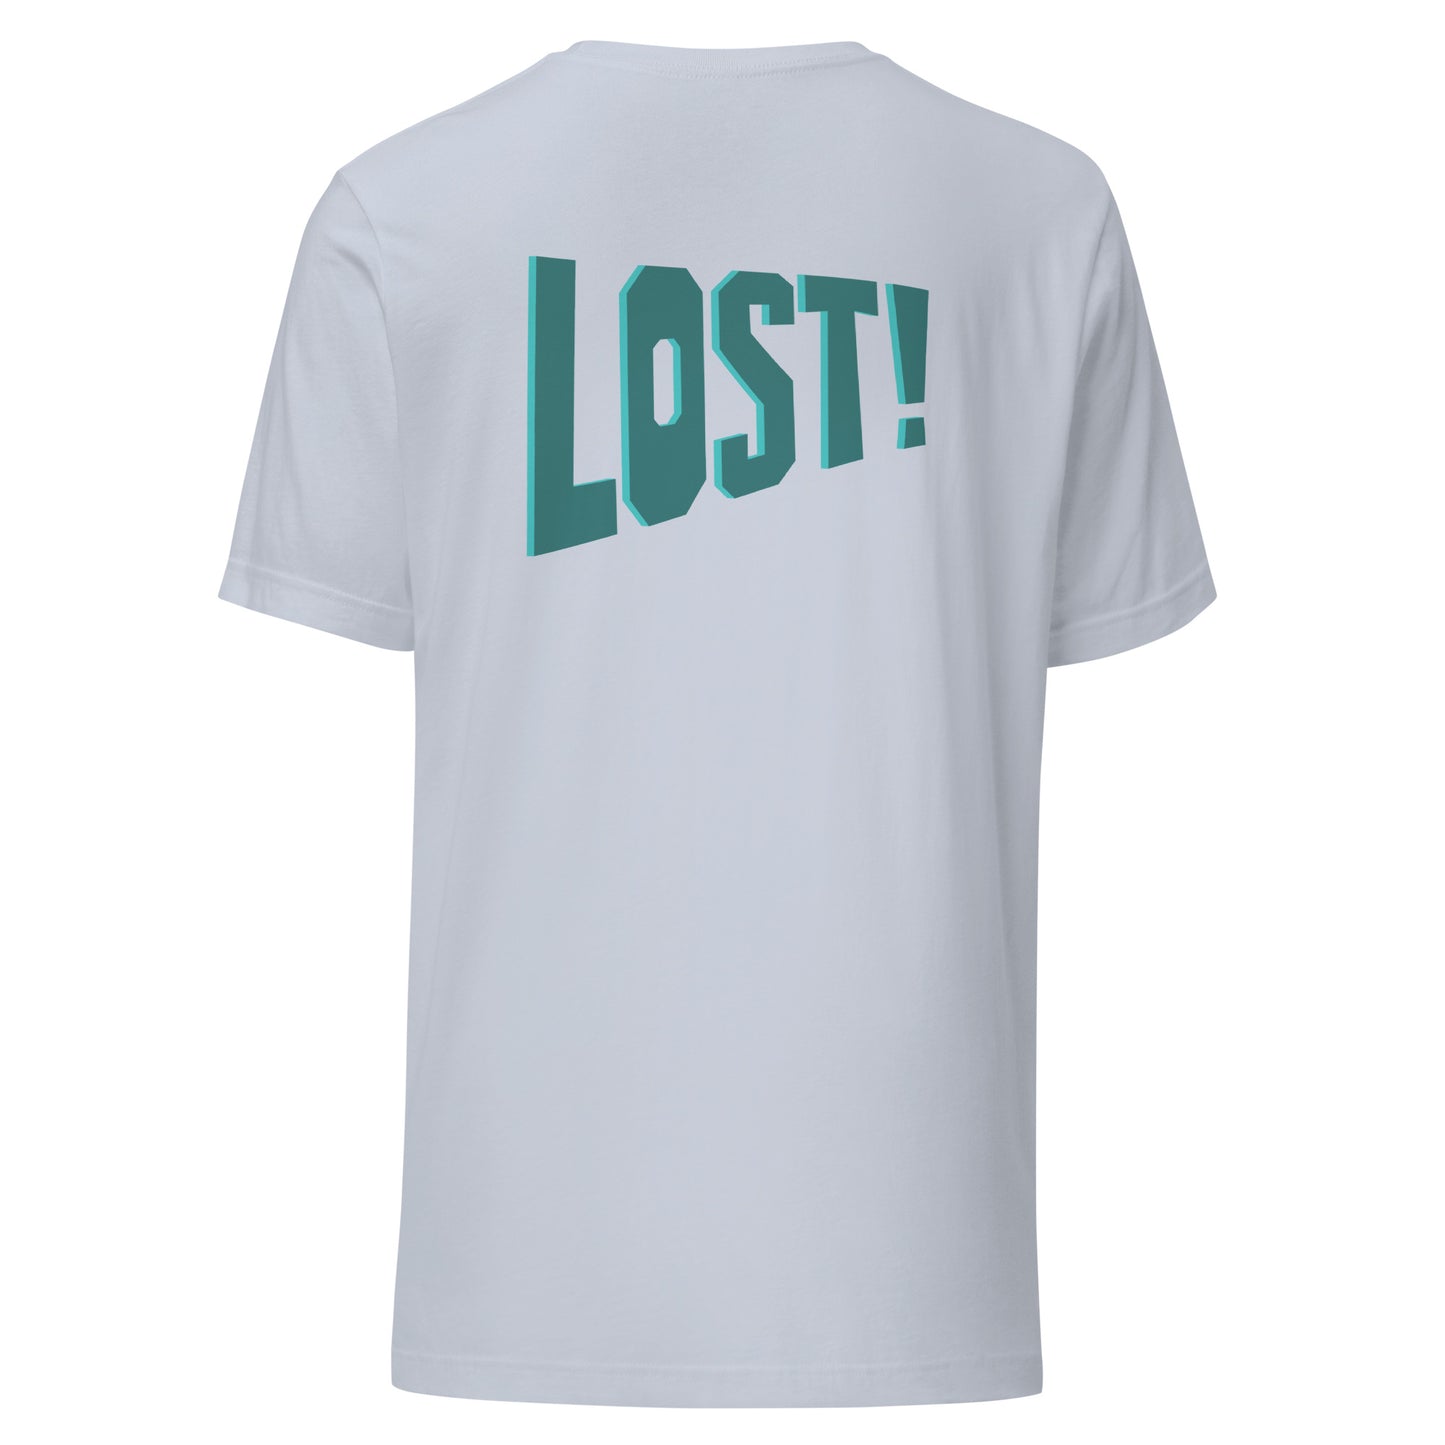 Lost! T-Shirt